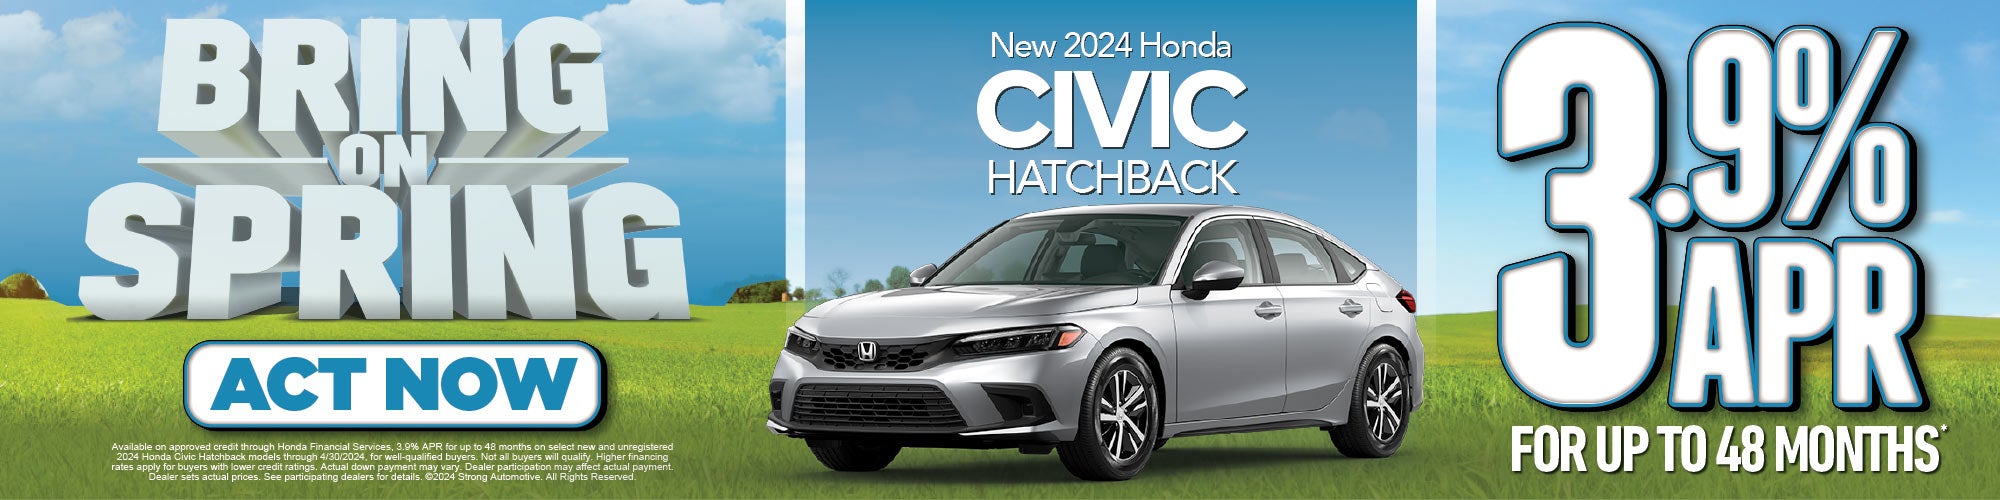 2024 Honda Civic Hatchback 3.9% APR for up to 48 months 